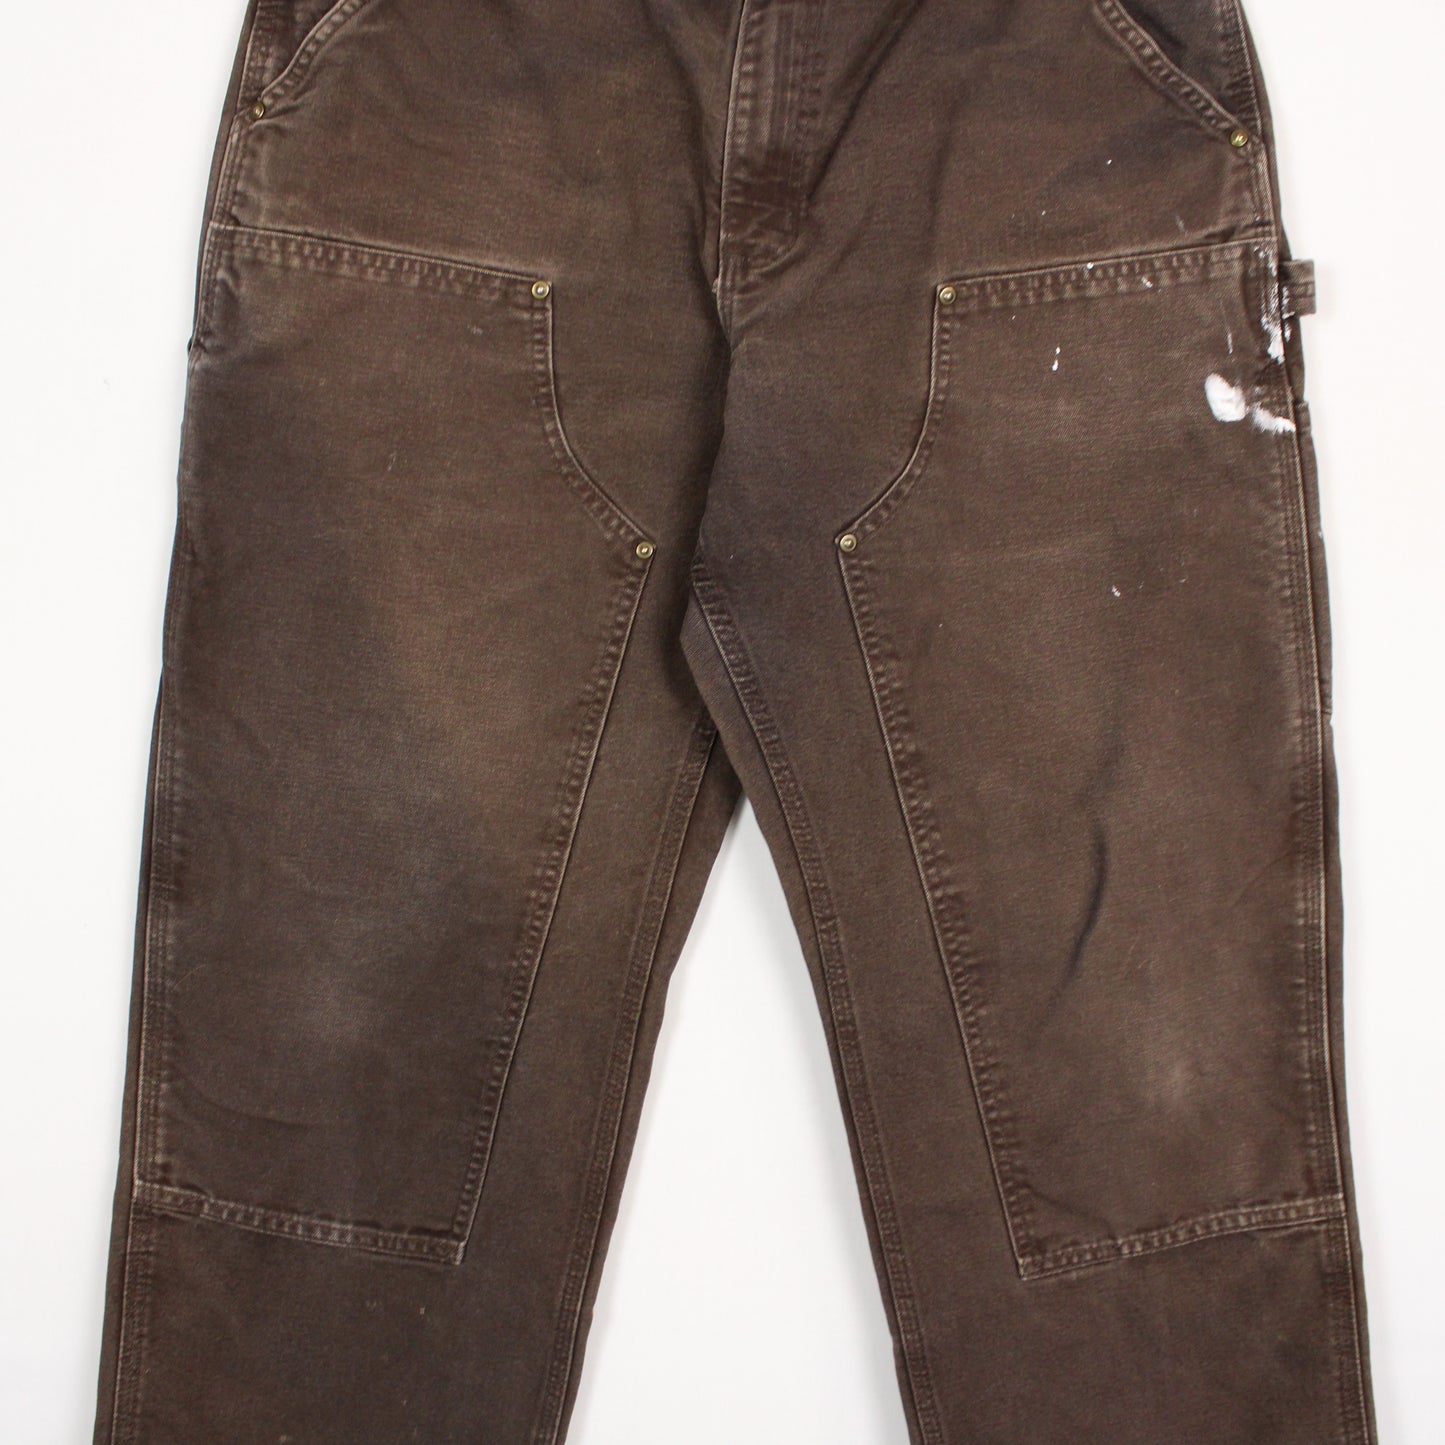 Vintage Carhartt Double Knee Carpenter Pants - 35x30